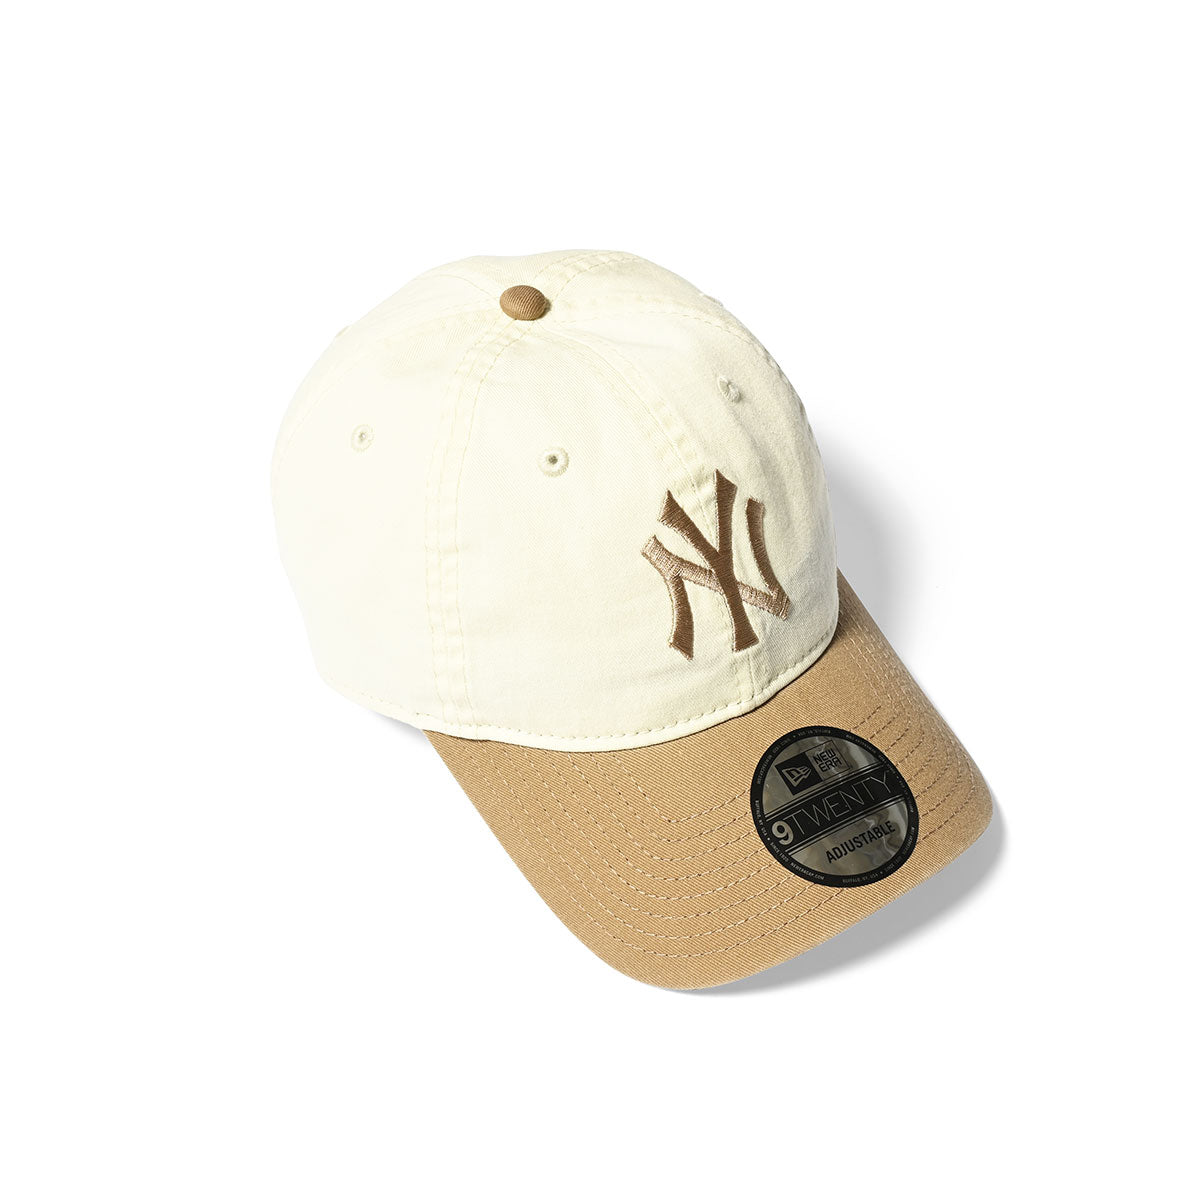 NEW ERA New York Yankees - 9TWENTY CROME WHITE KHAKI【14353291】